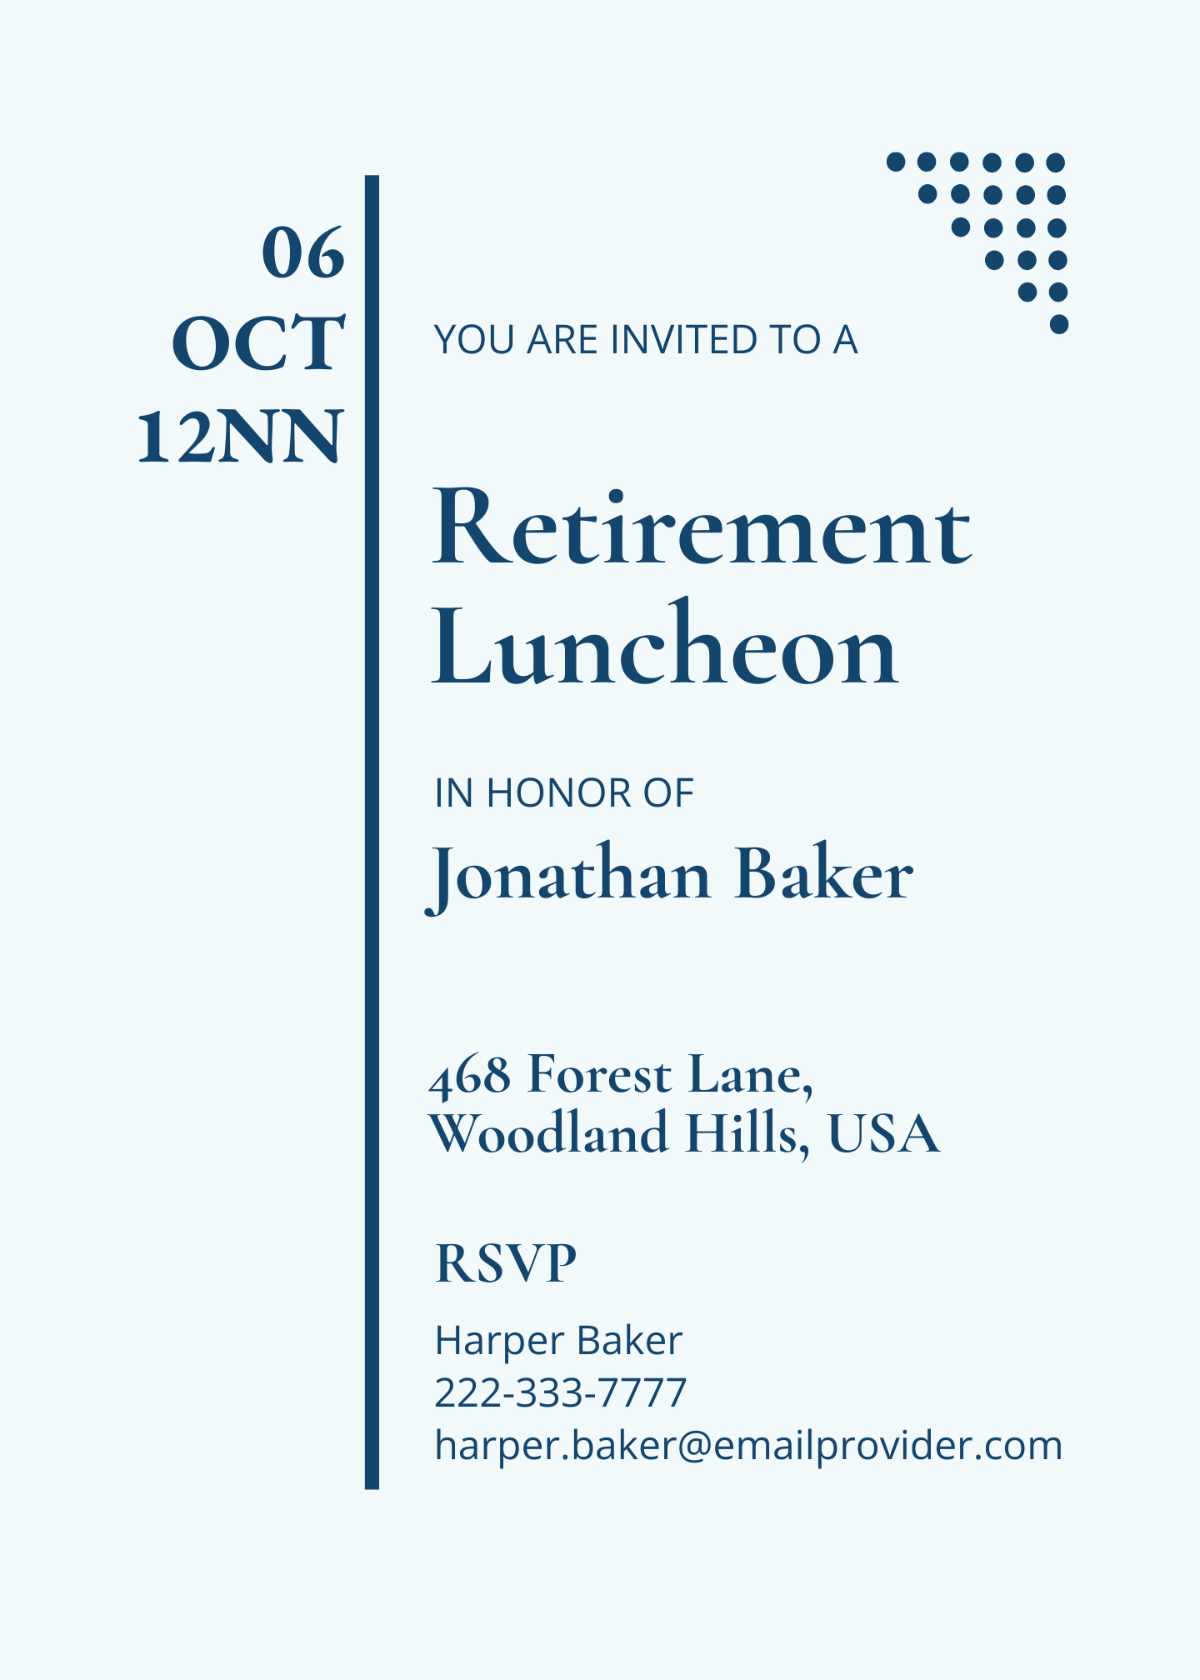 Retirement luncheon party invitation